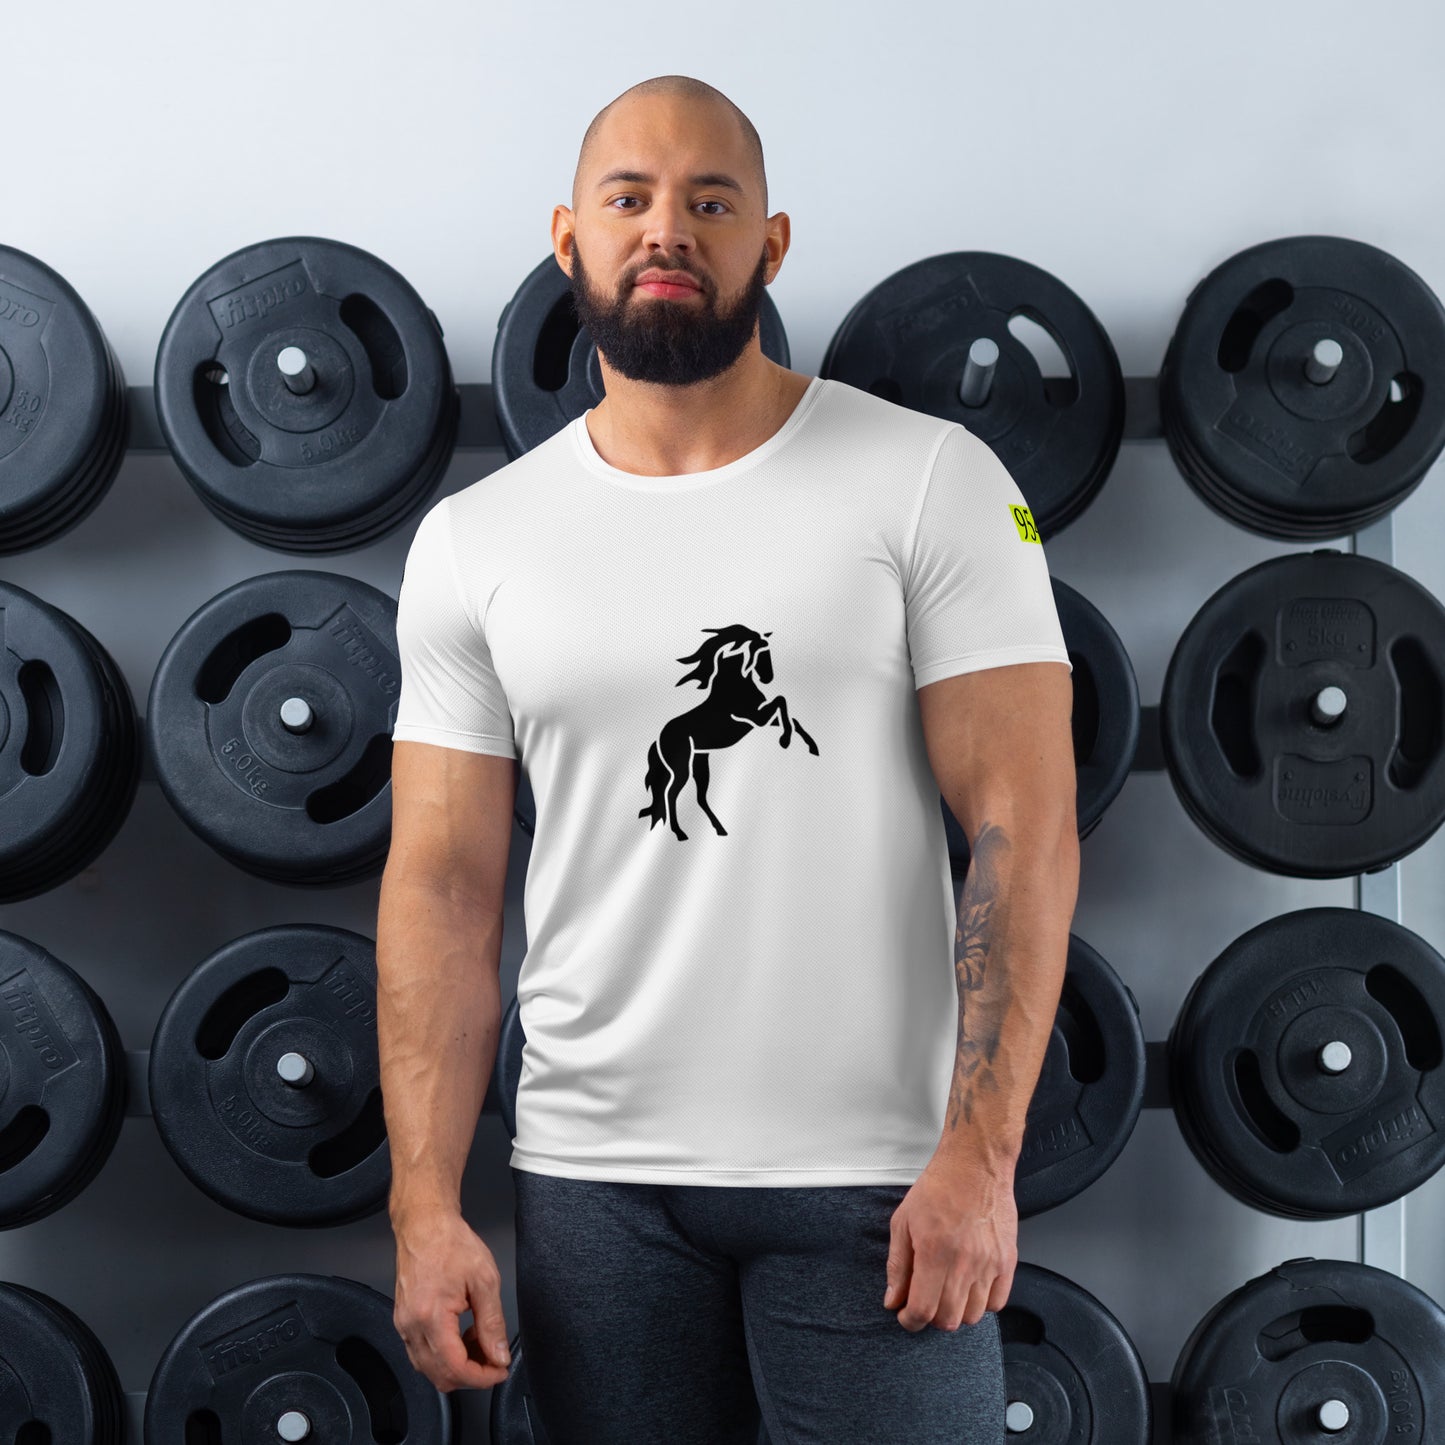 954 Solitude - Men's Athletic T-shirt